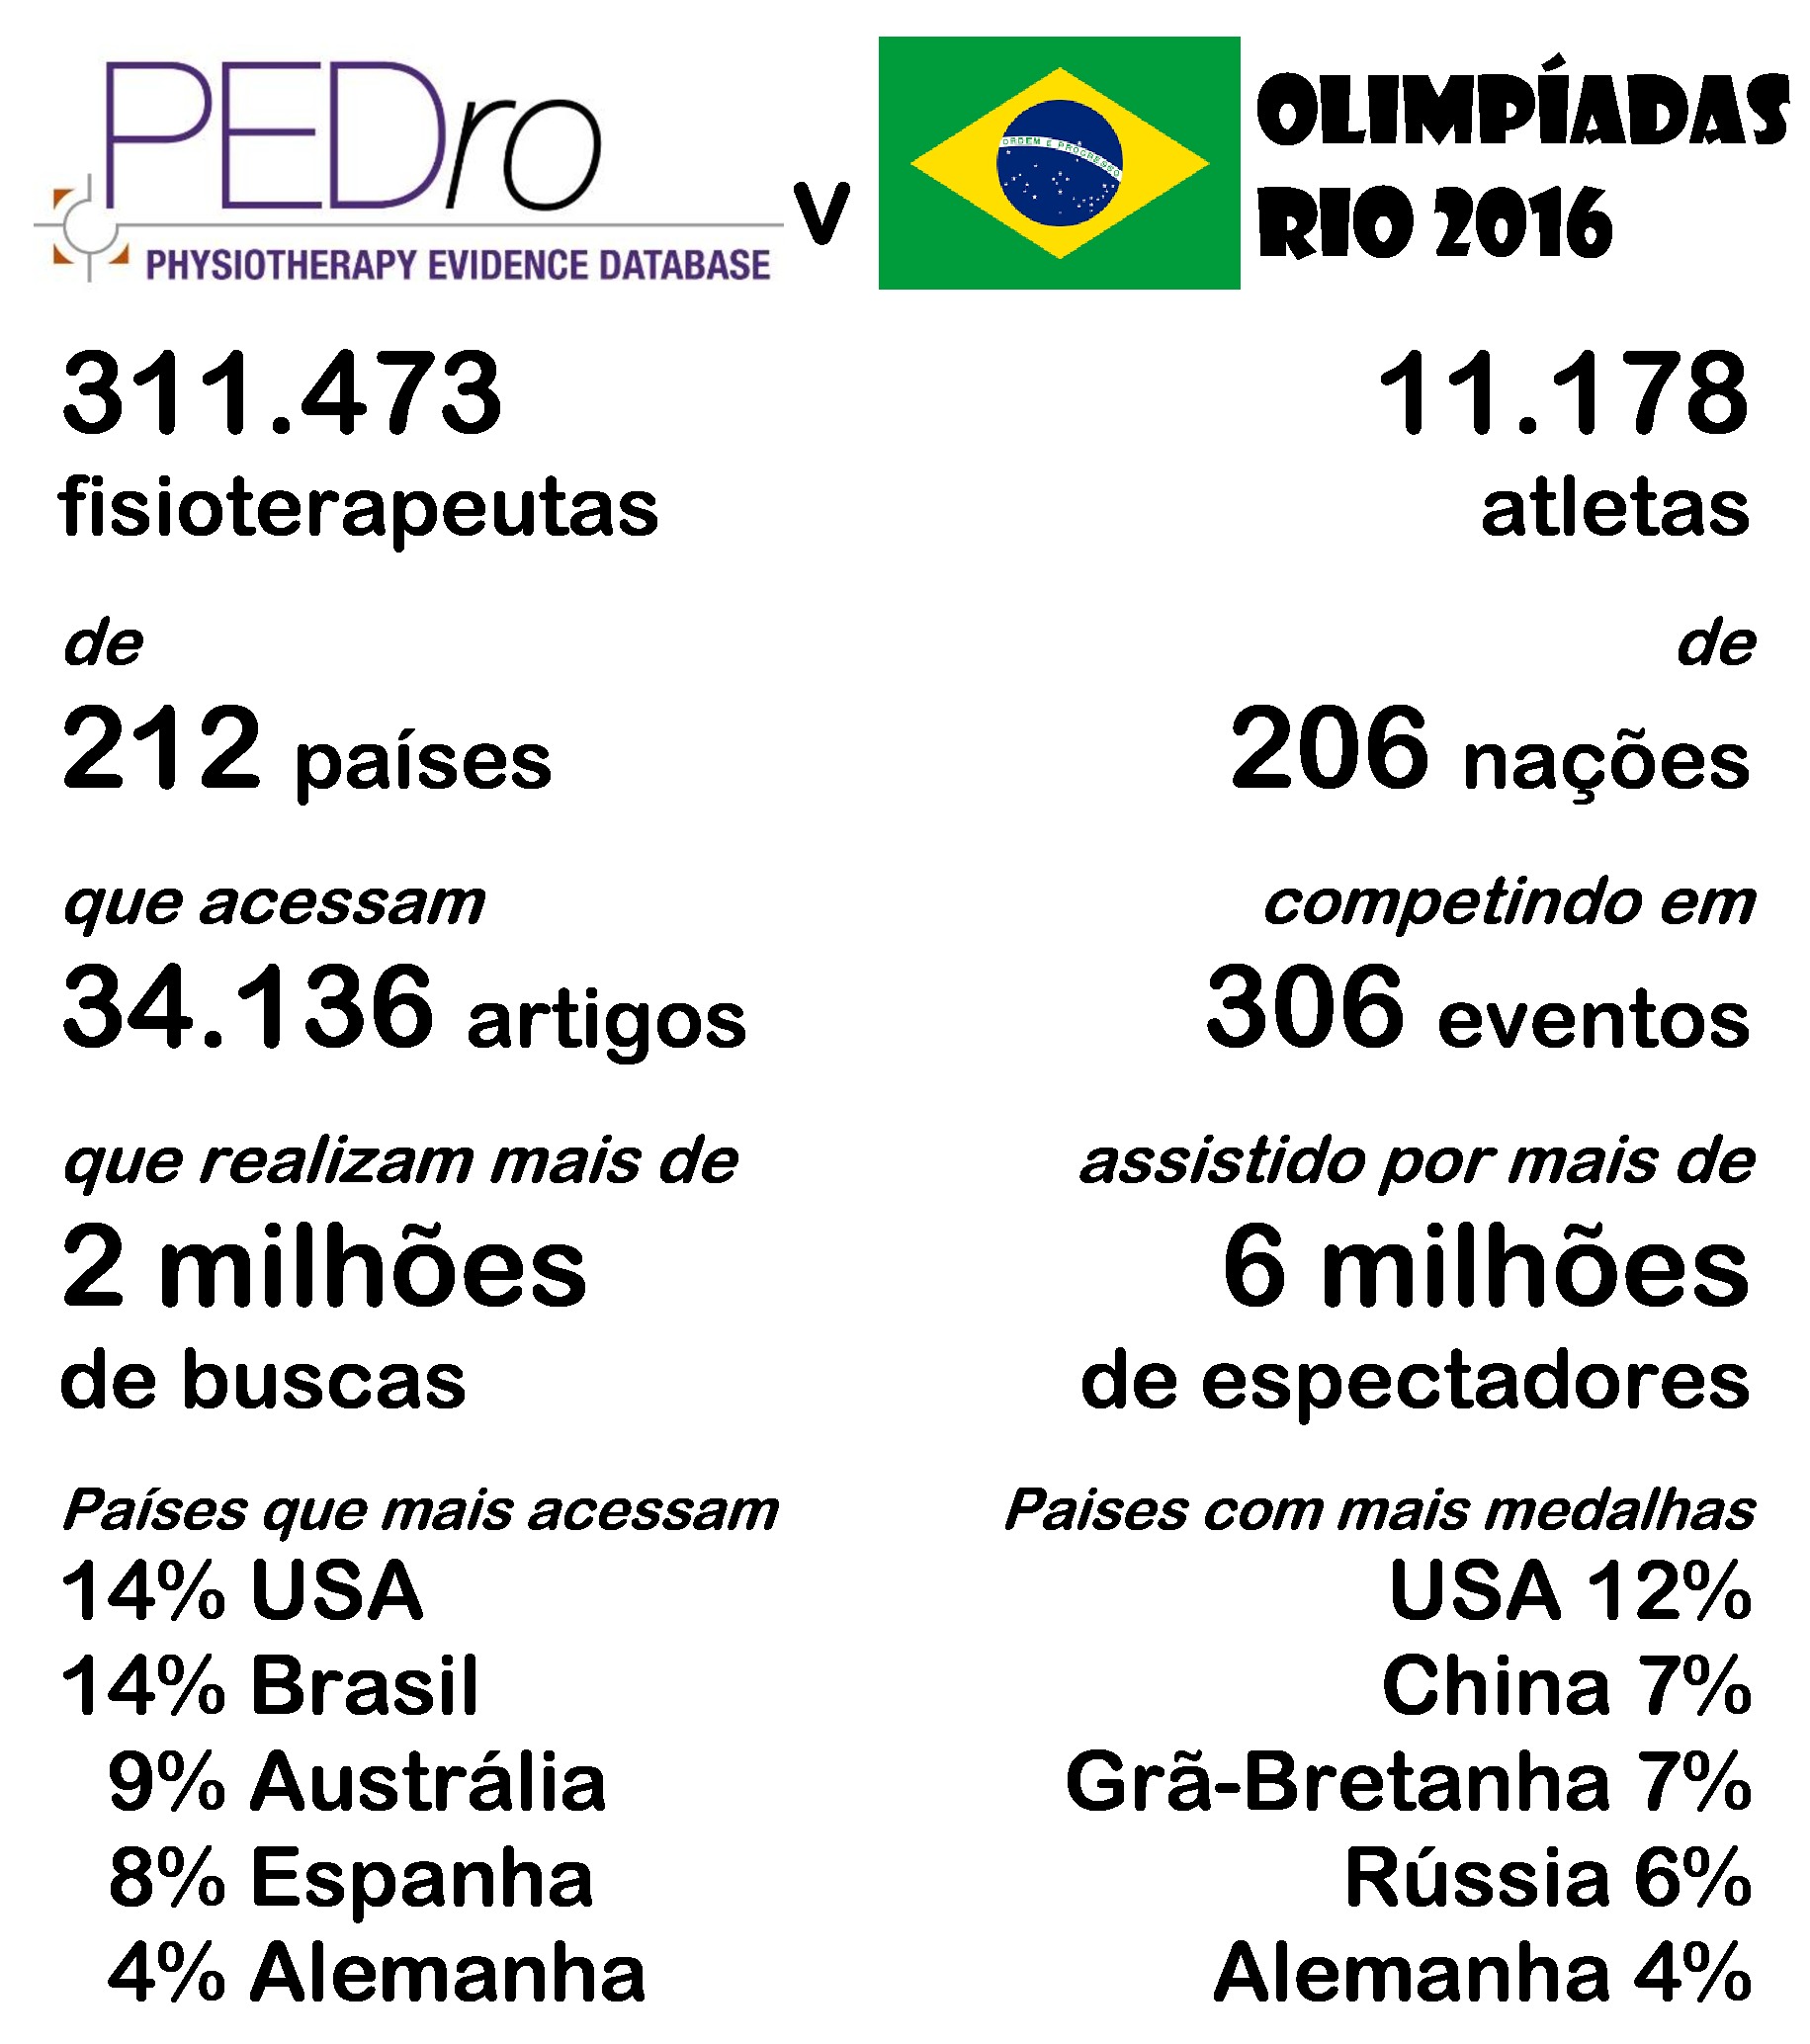 olympics infographic Portuguese 2